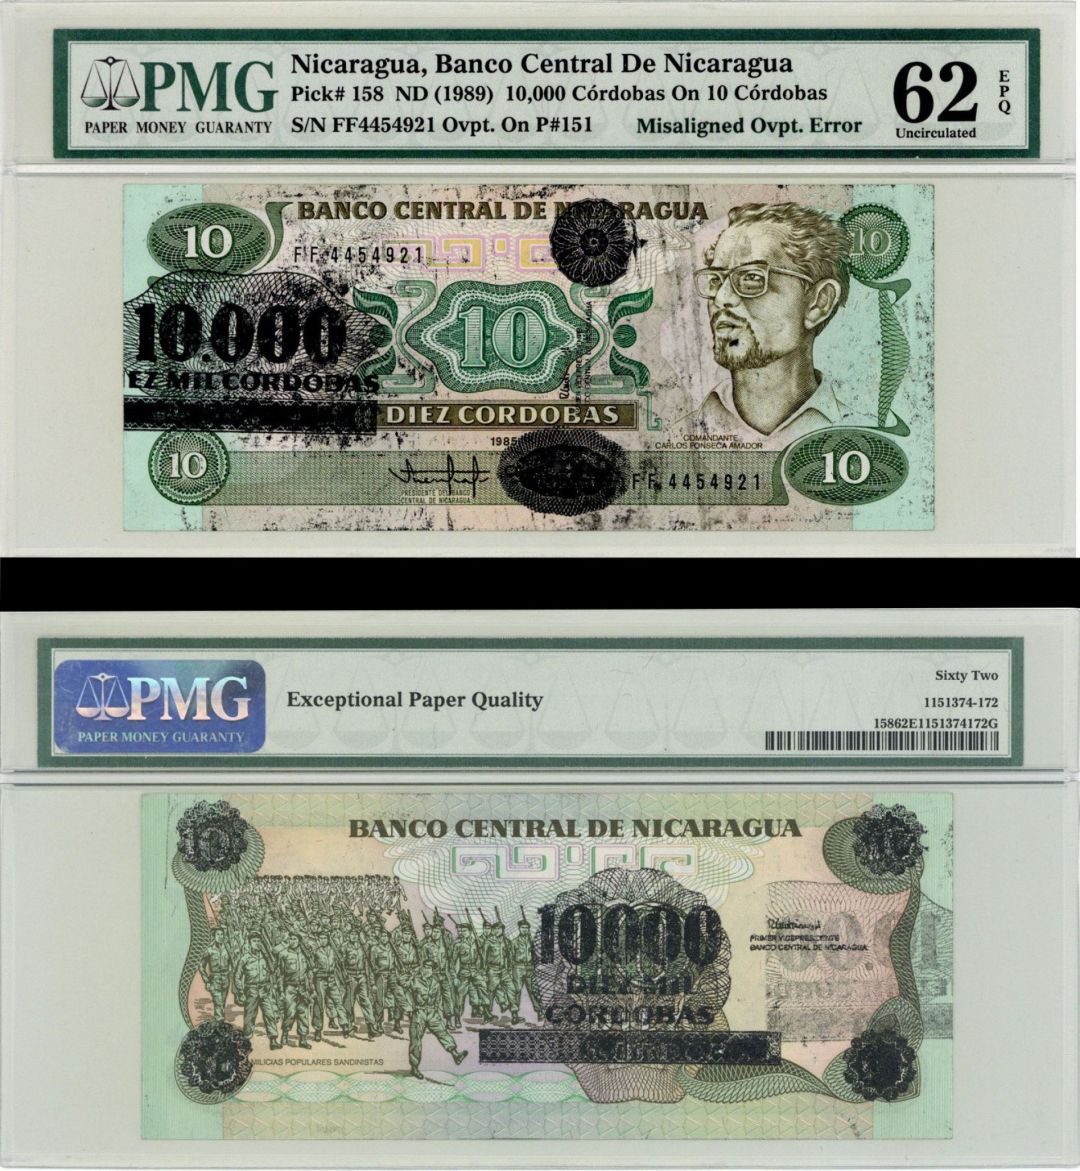 Nicaragua - 10,000 Cordobas on 10 Cordobas - P-158 - PMG 62 - Foreign Paper Money Error